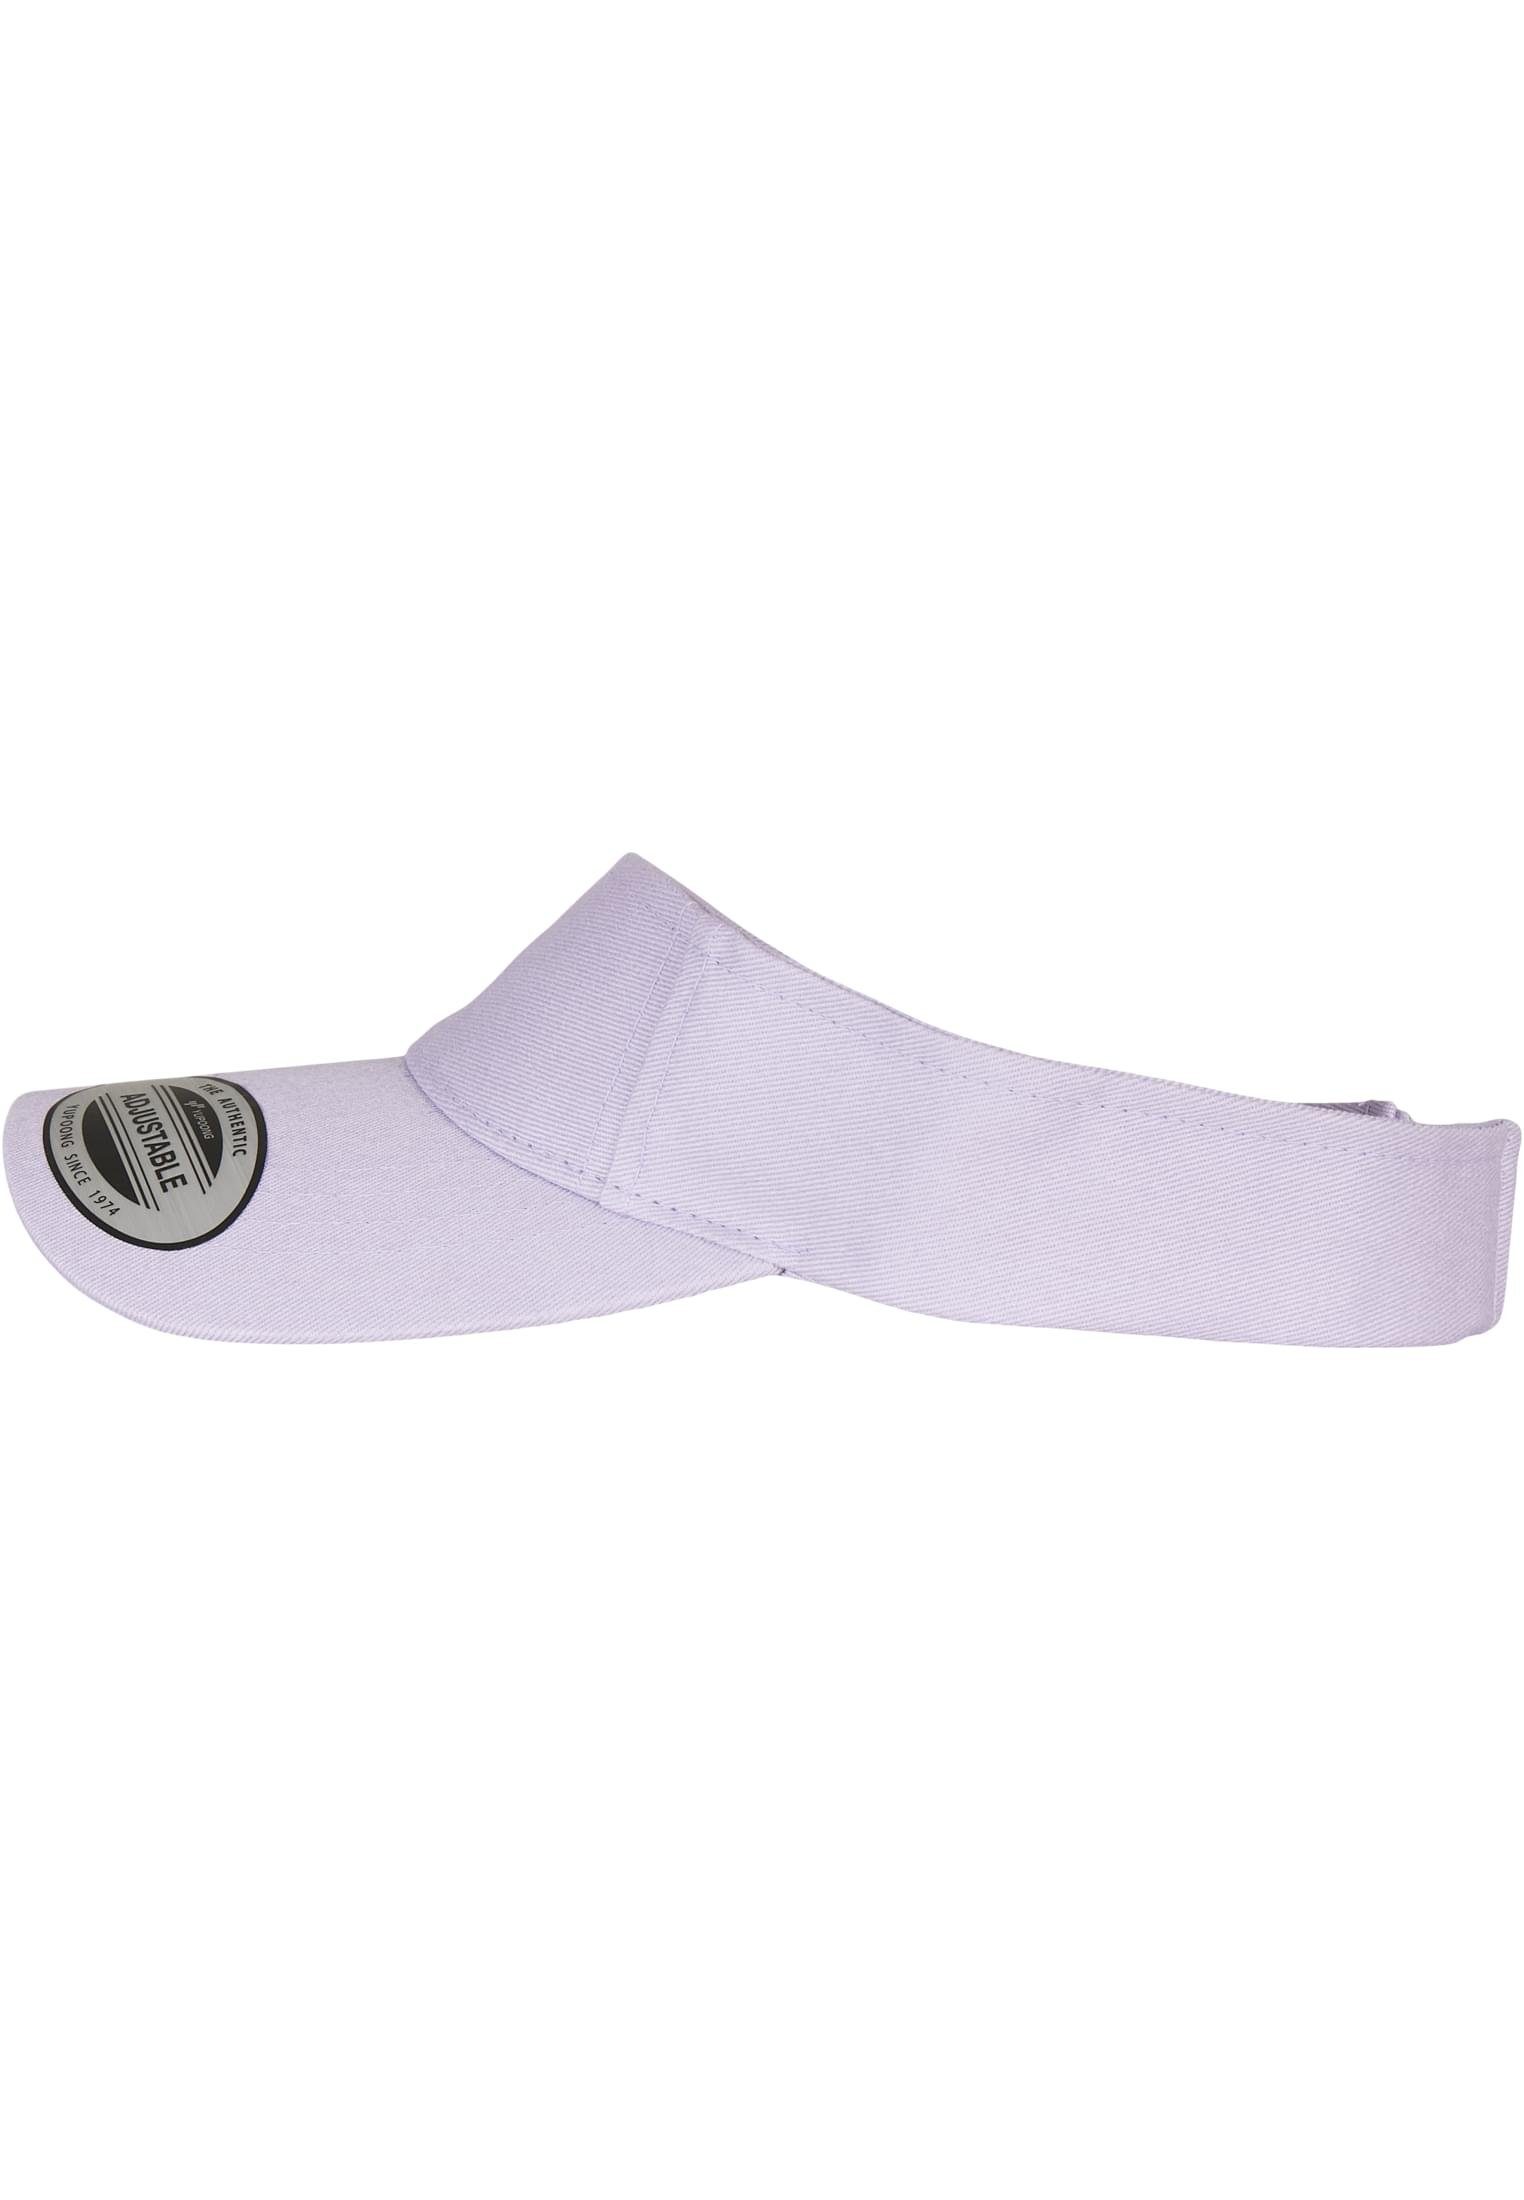 Cap Cap Accessoires Flex Visor lilac Curved Flexfit